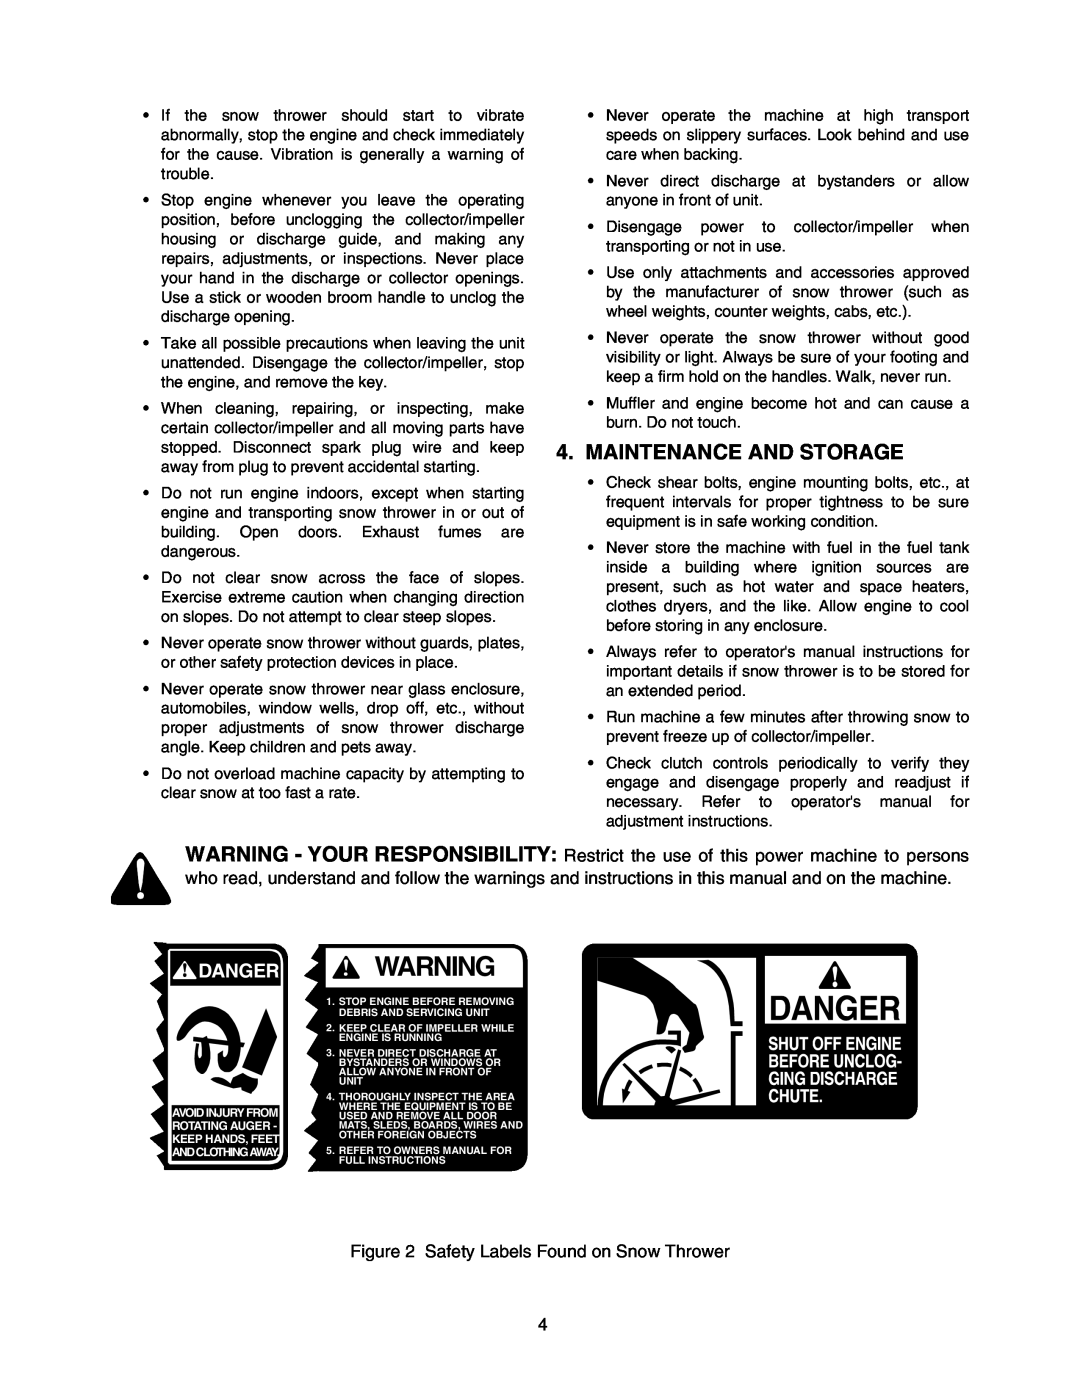 MTD 993 manual Maintenance And Storage, Danger 